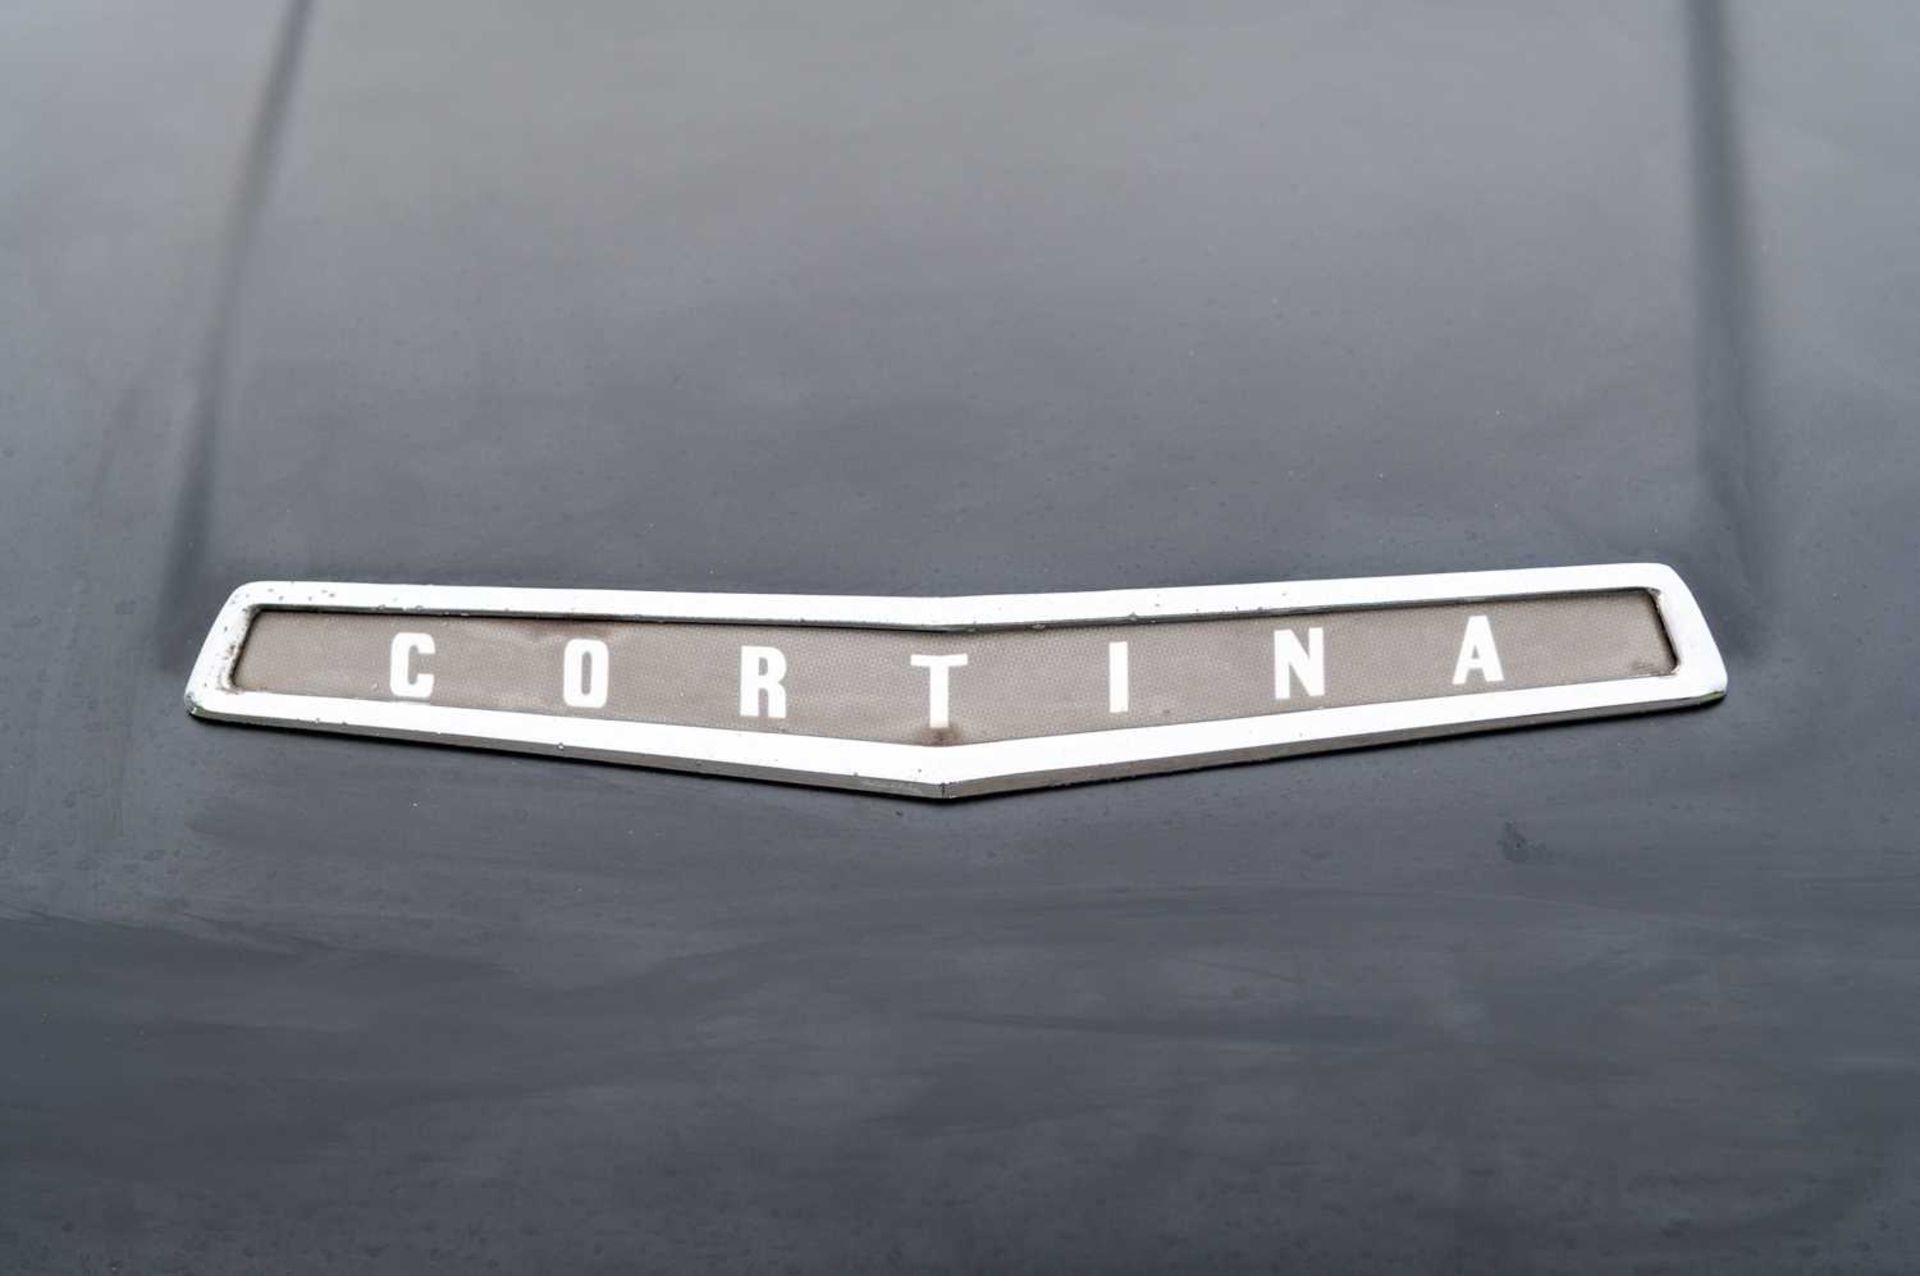 1966 Lotus Cortina MK1 - Image 31 of 68